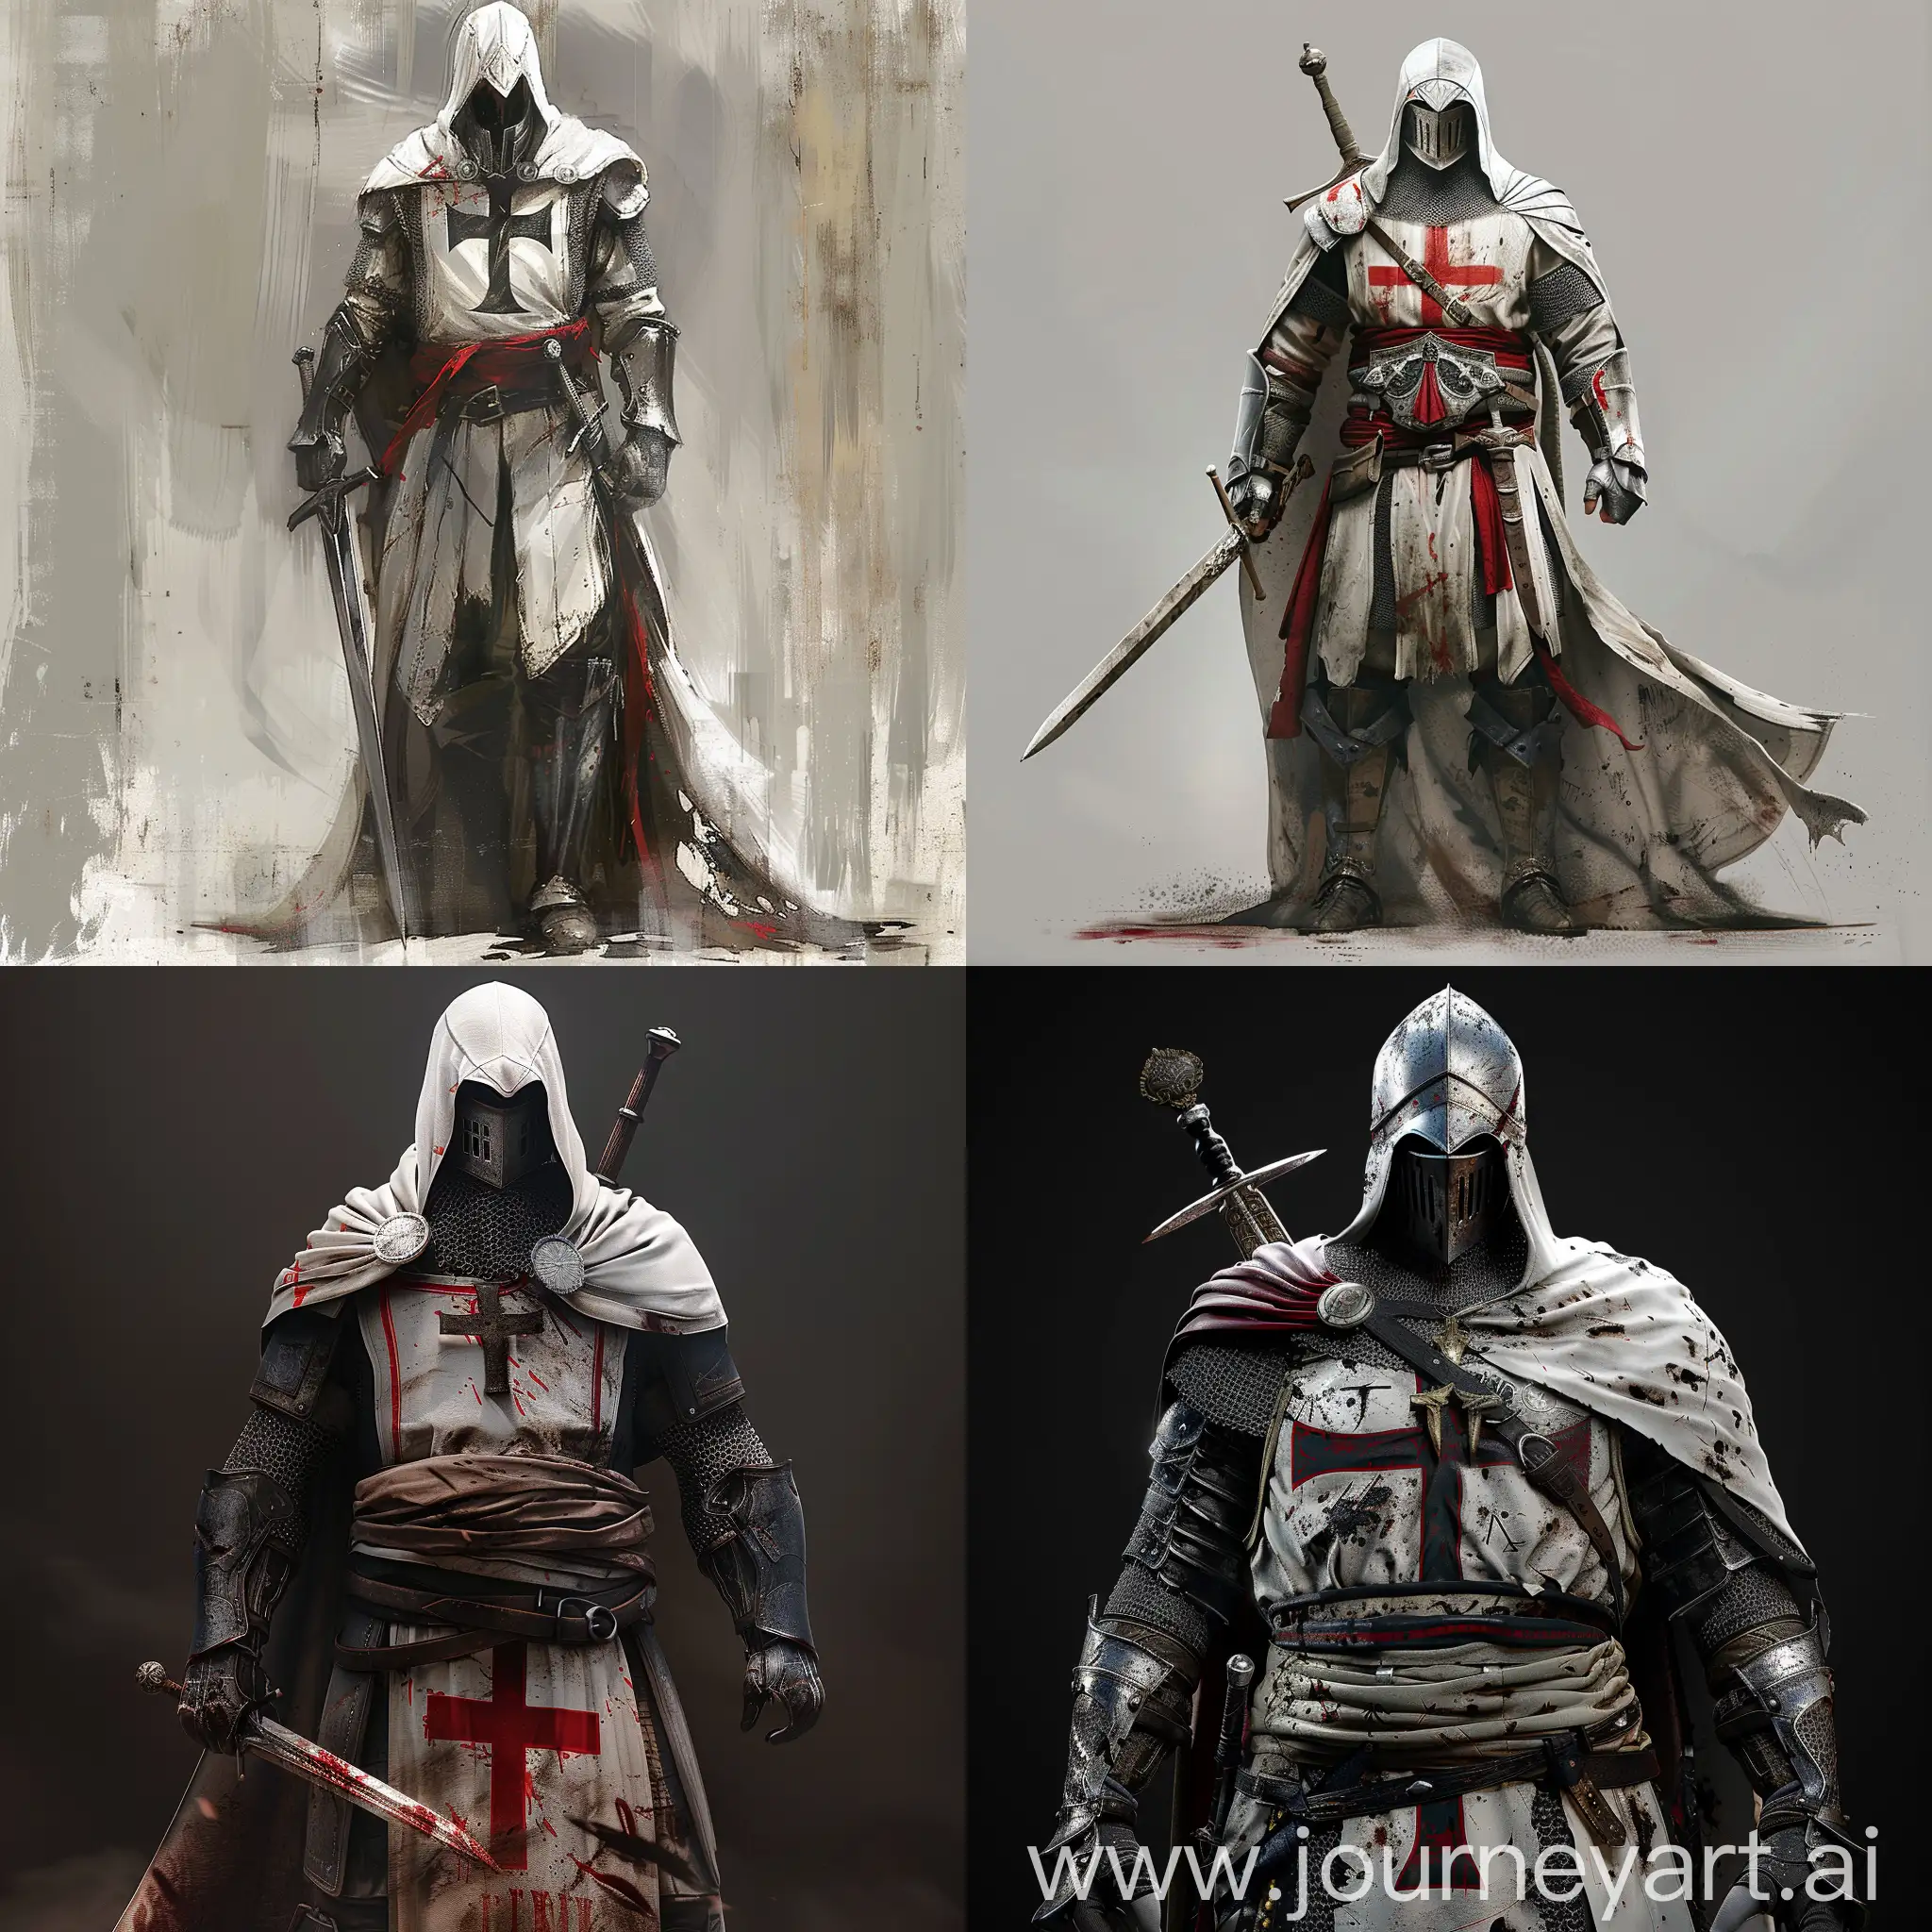 Templar knight with assassin creed characteristics